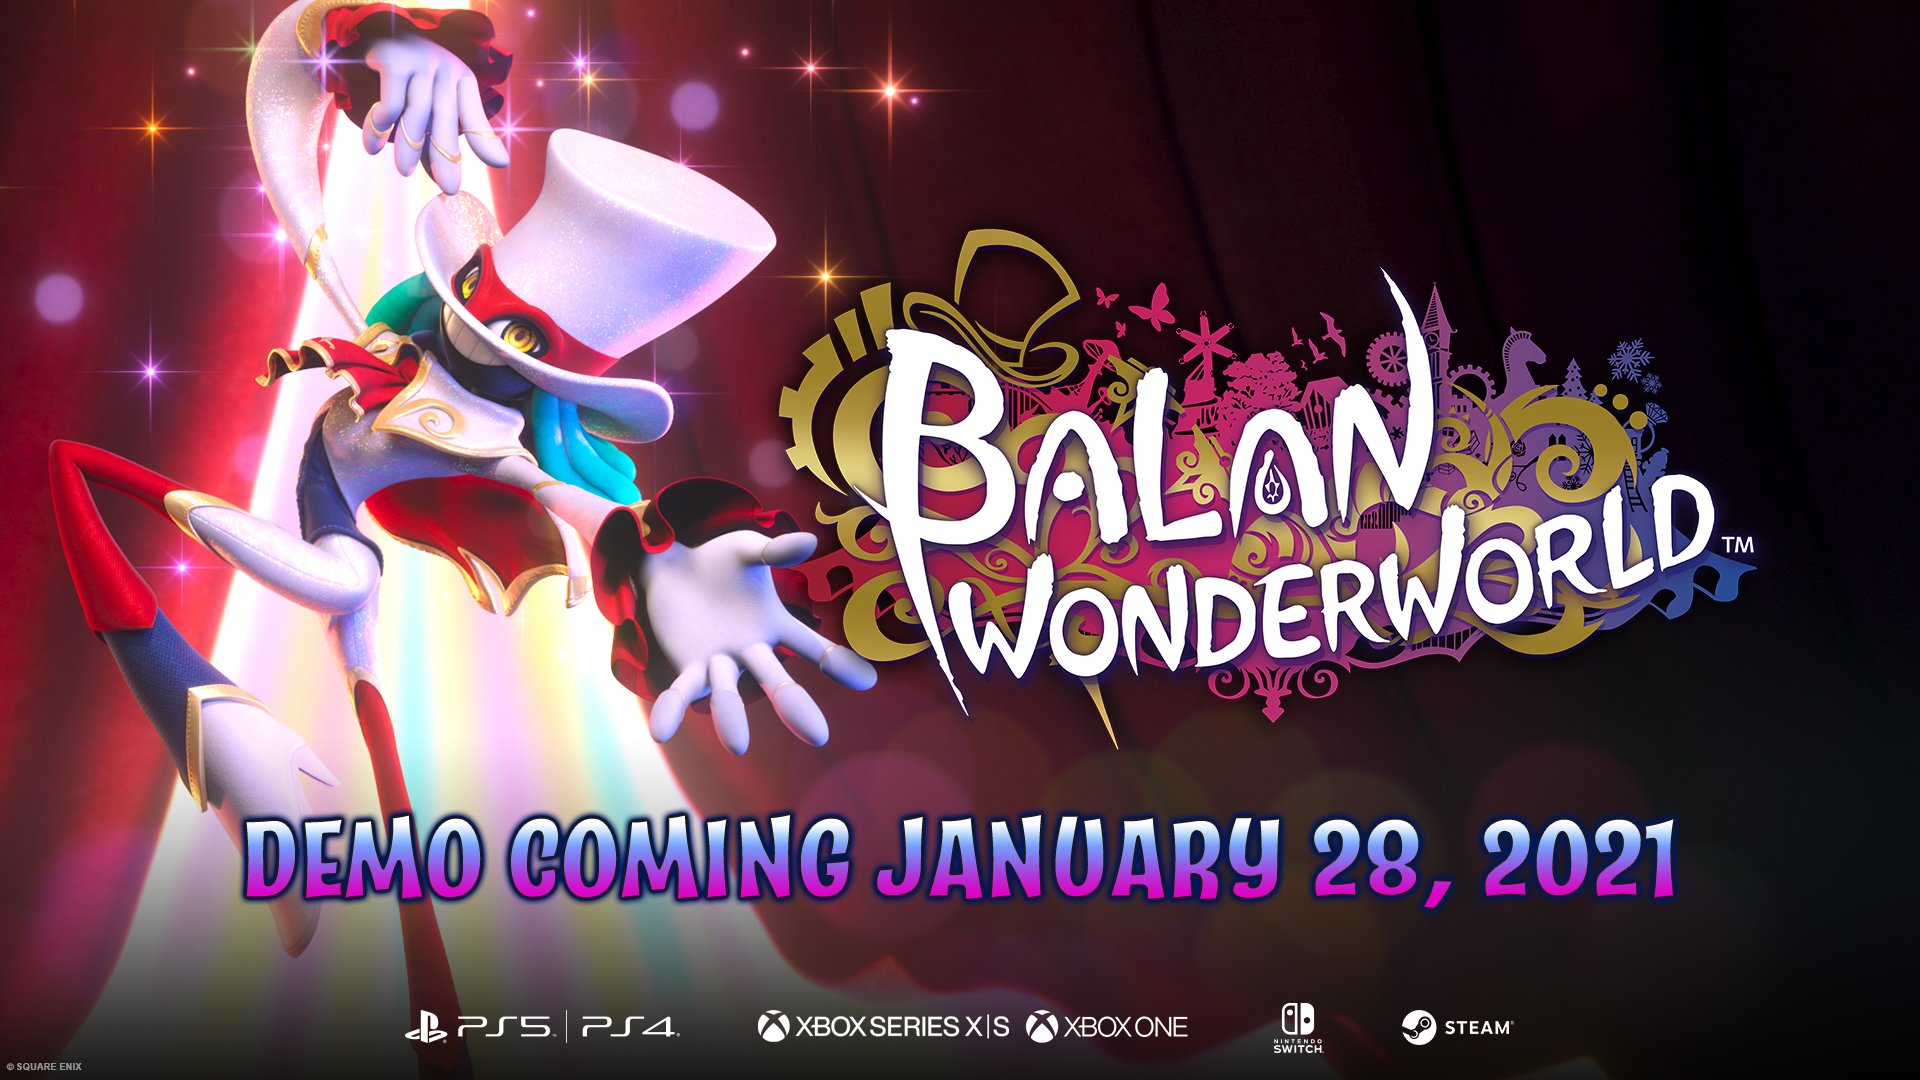 The Balan Wonderworld demo launches on January 28